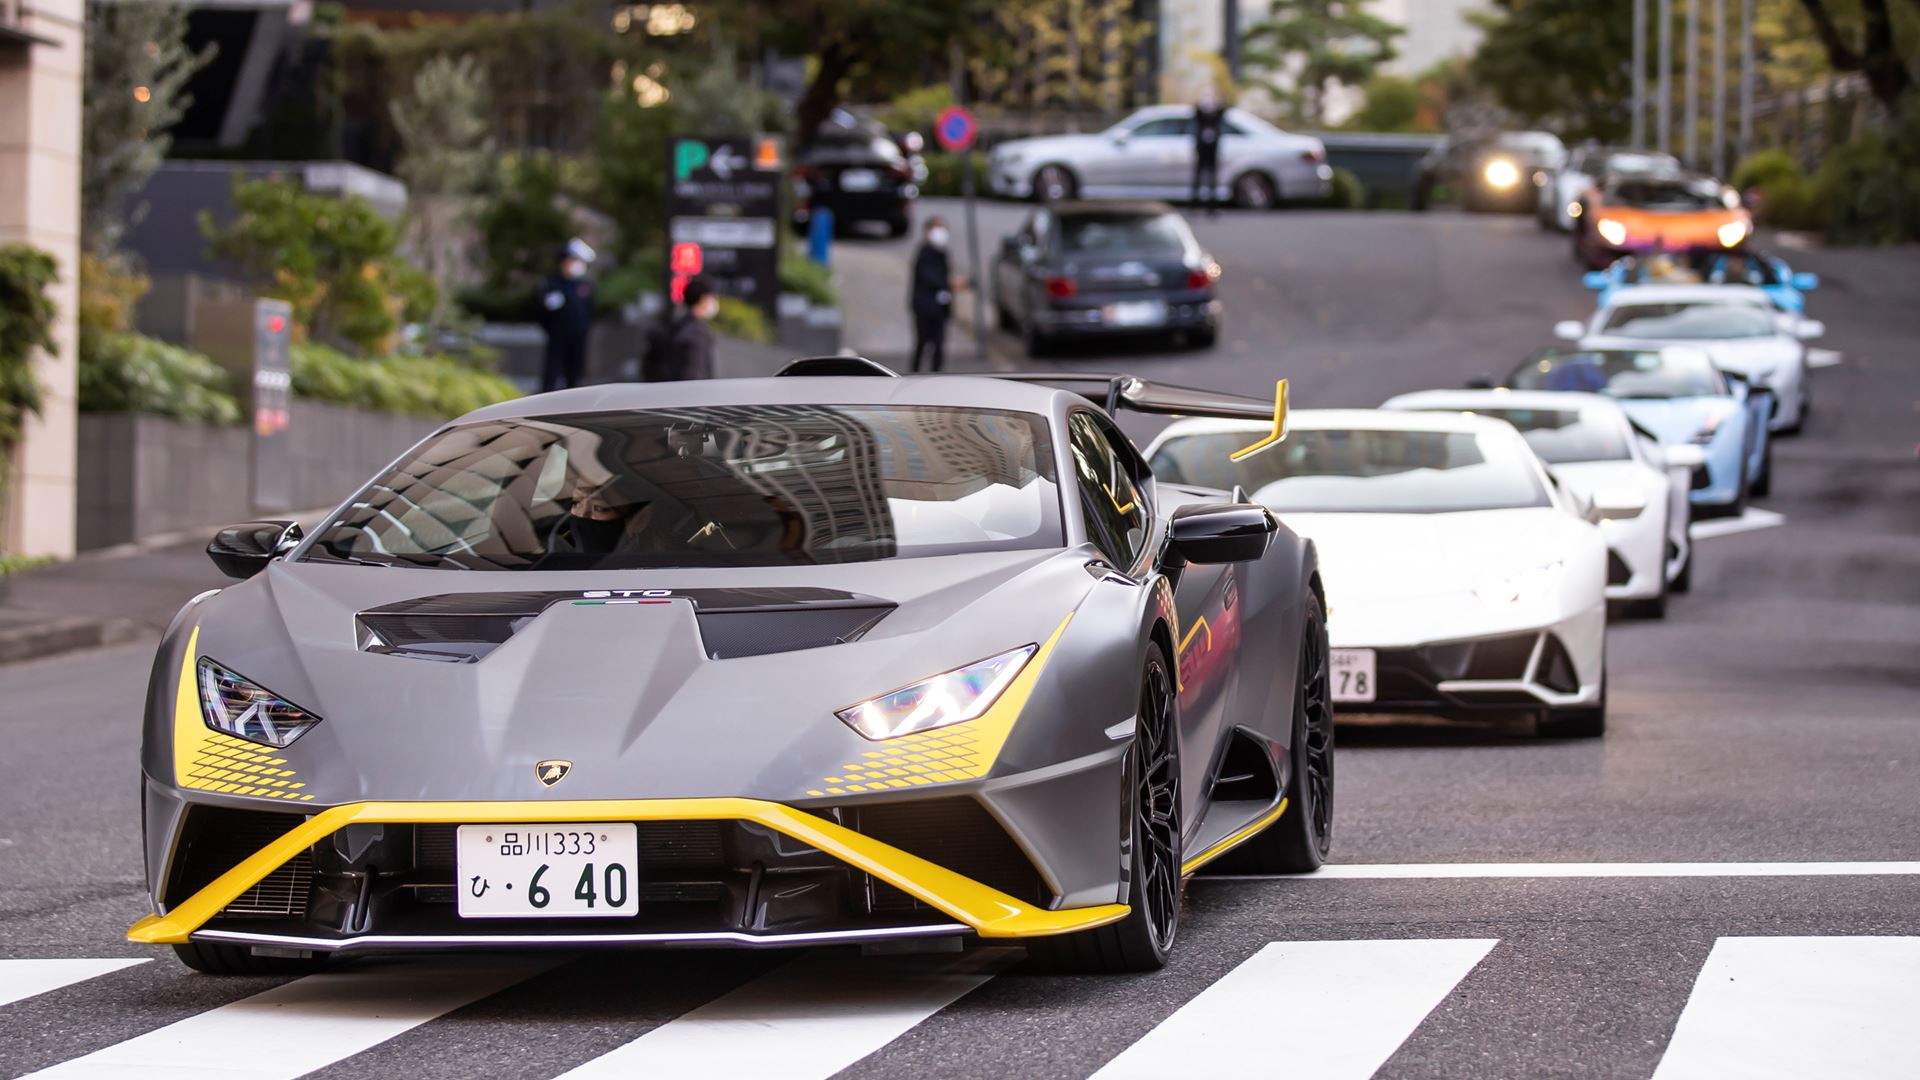 Lamborghini Day Japan 2021 commemorating the 50th anniversary of Countach - Image 3